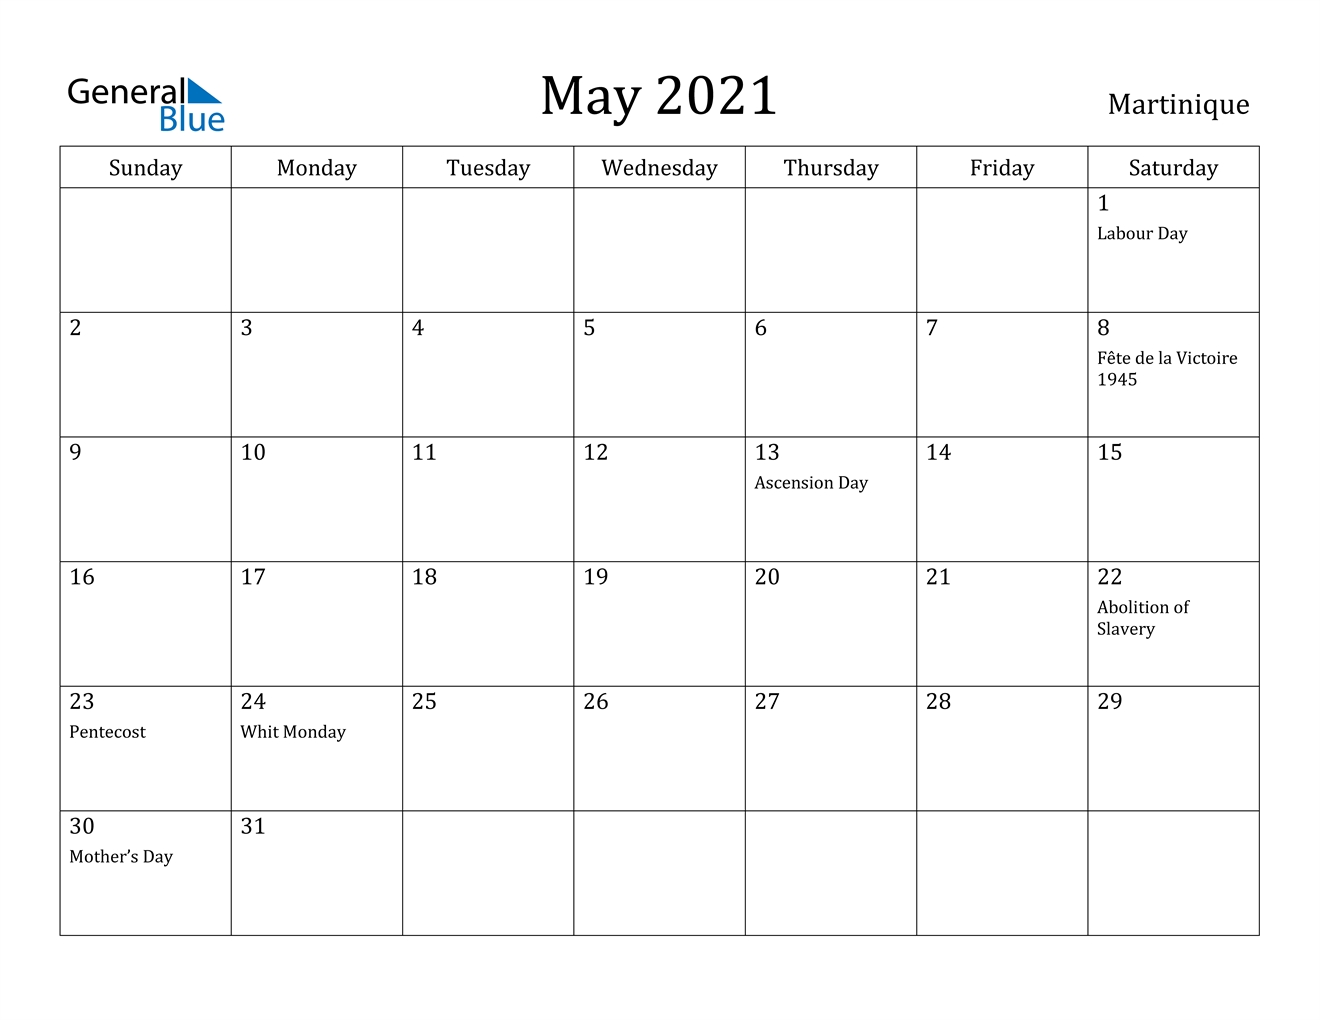 May 2021 Calendar - Martinique